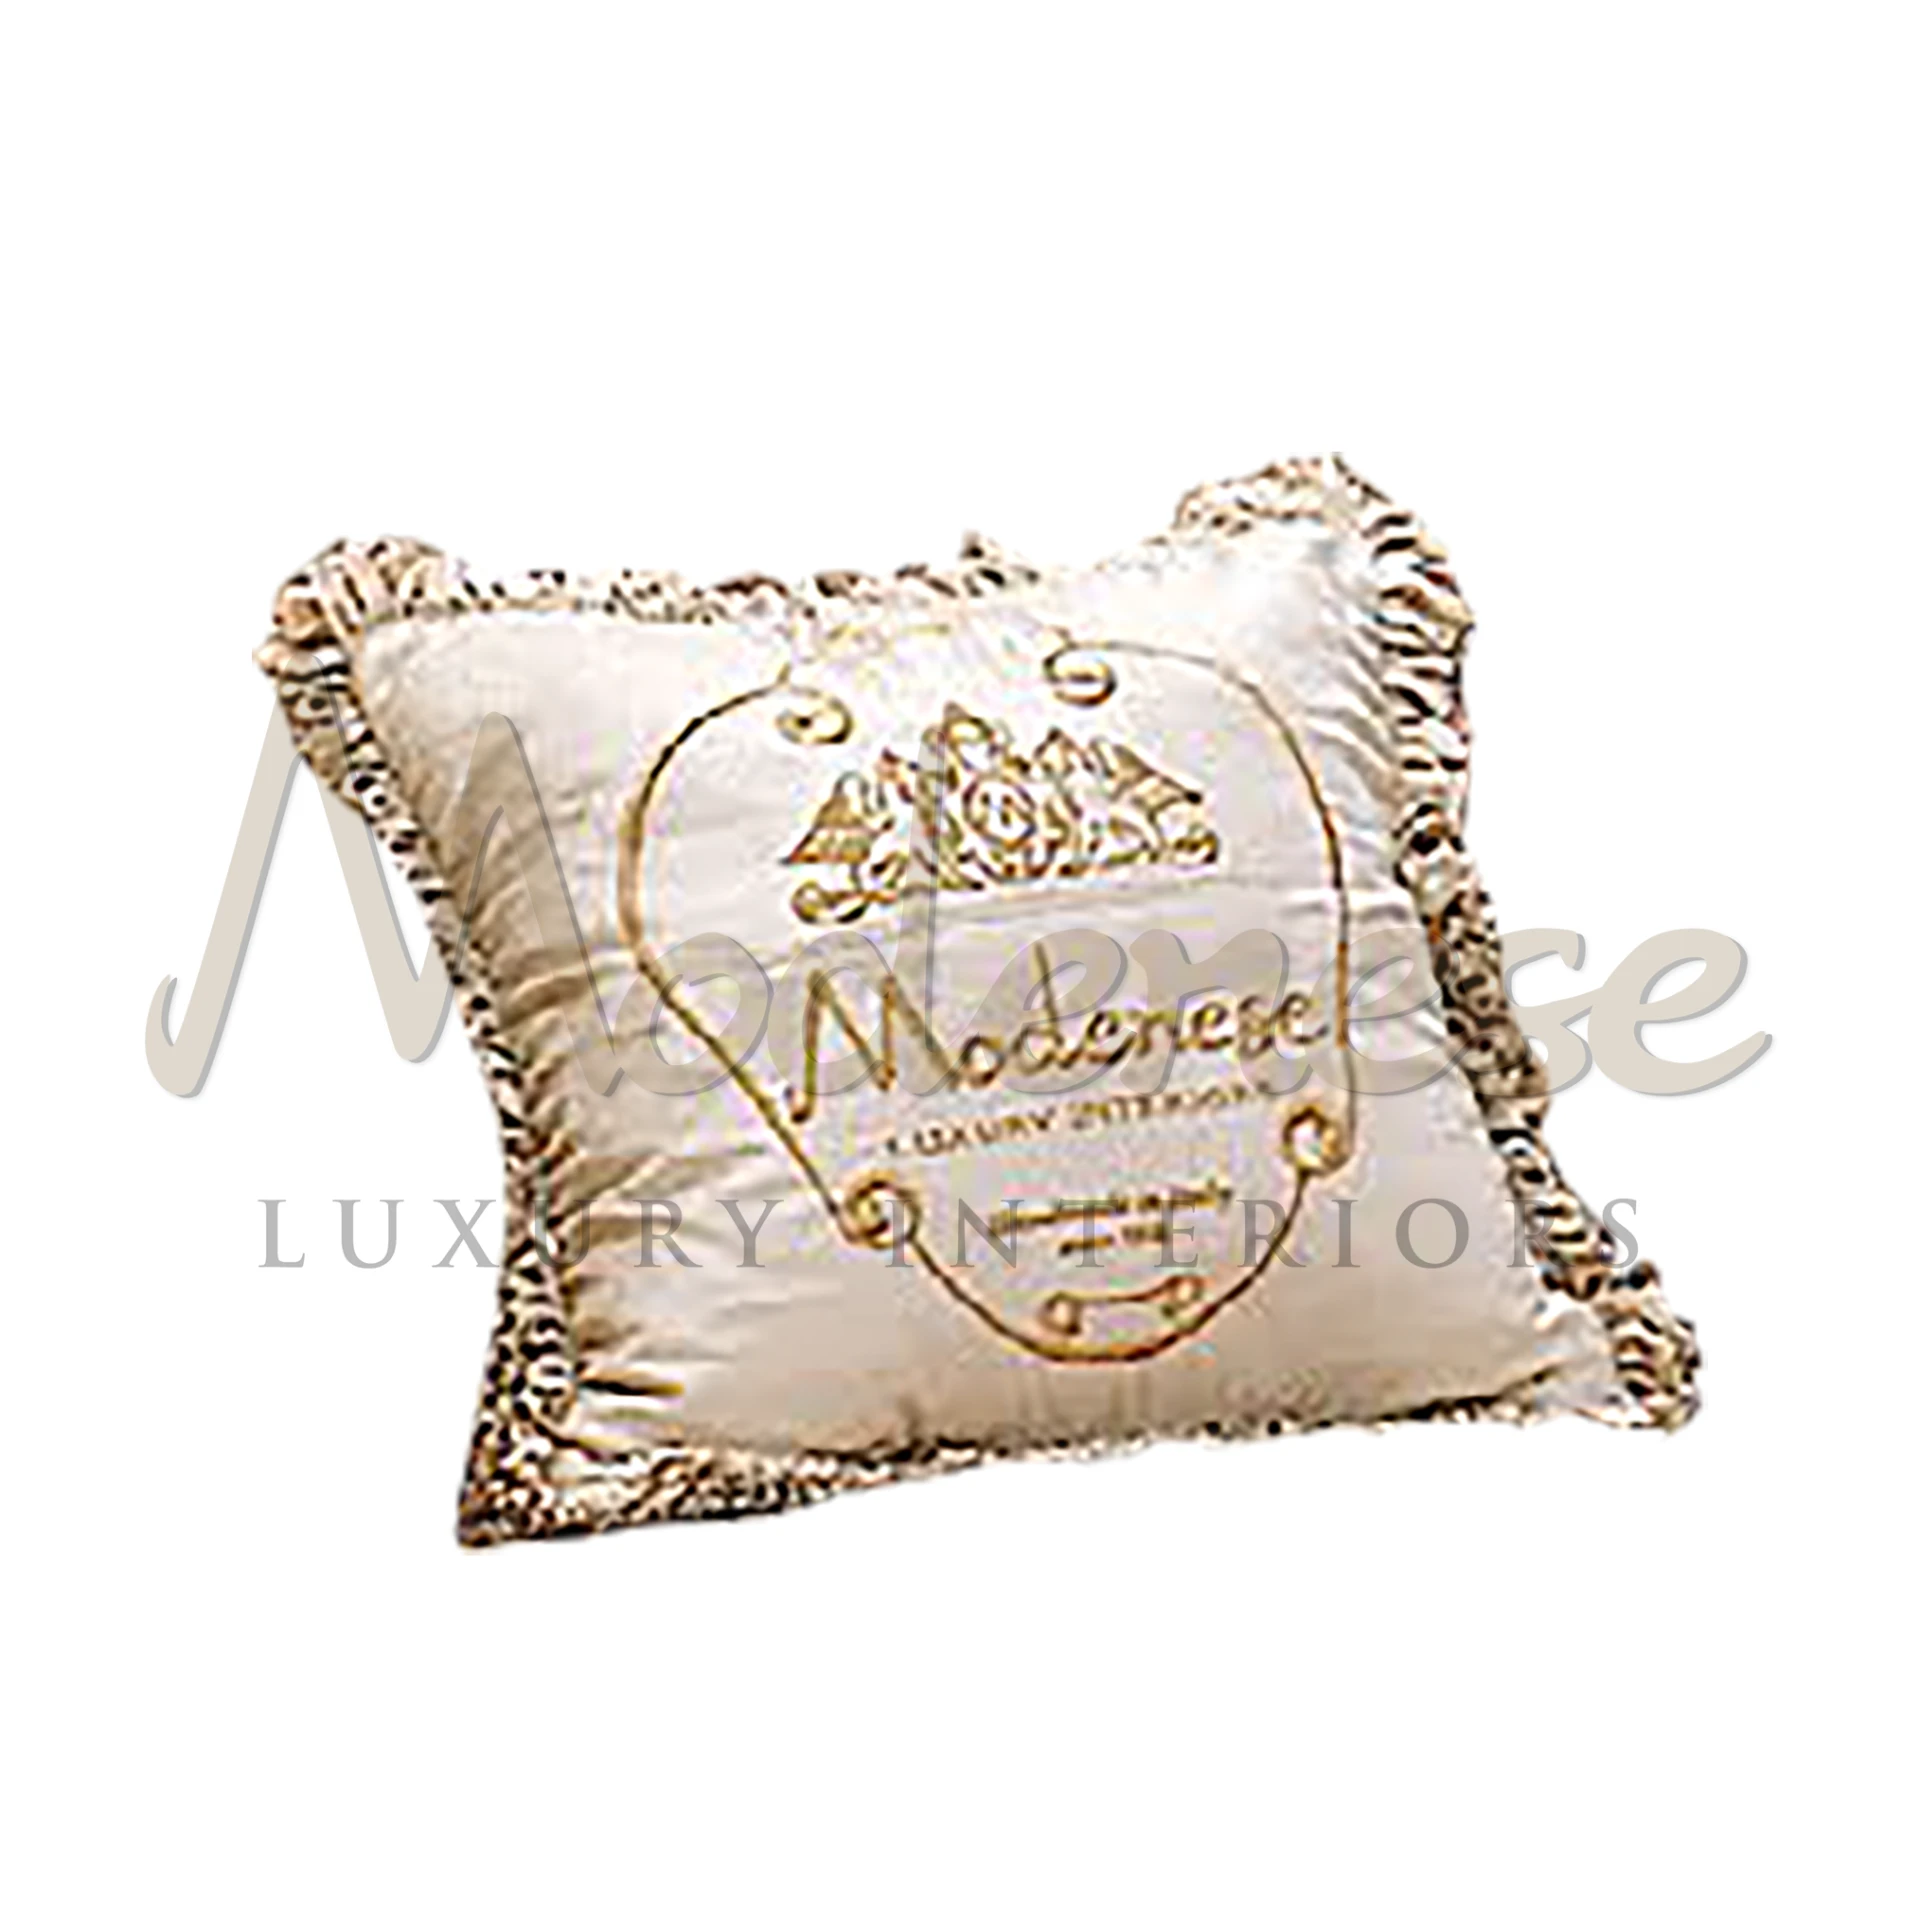 Luxurious Designer Modenese Pillow with premium fabrics and hypoallergenic filling, embodying Italian craftsmanship.